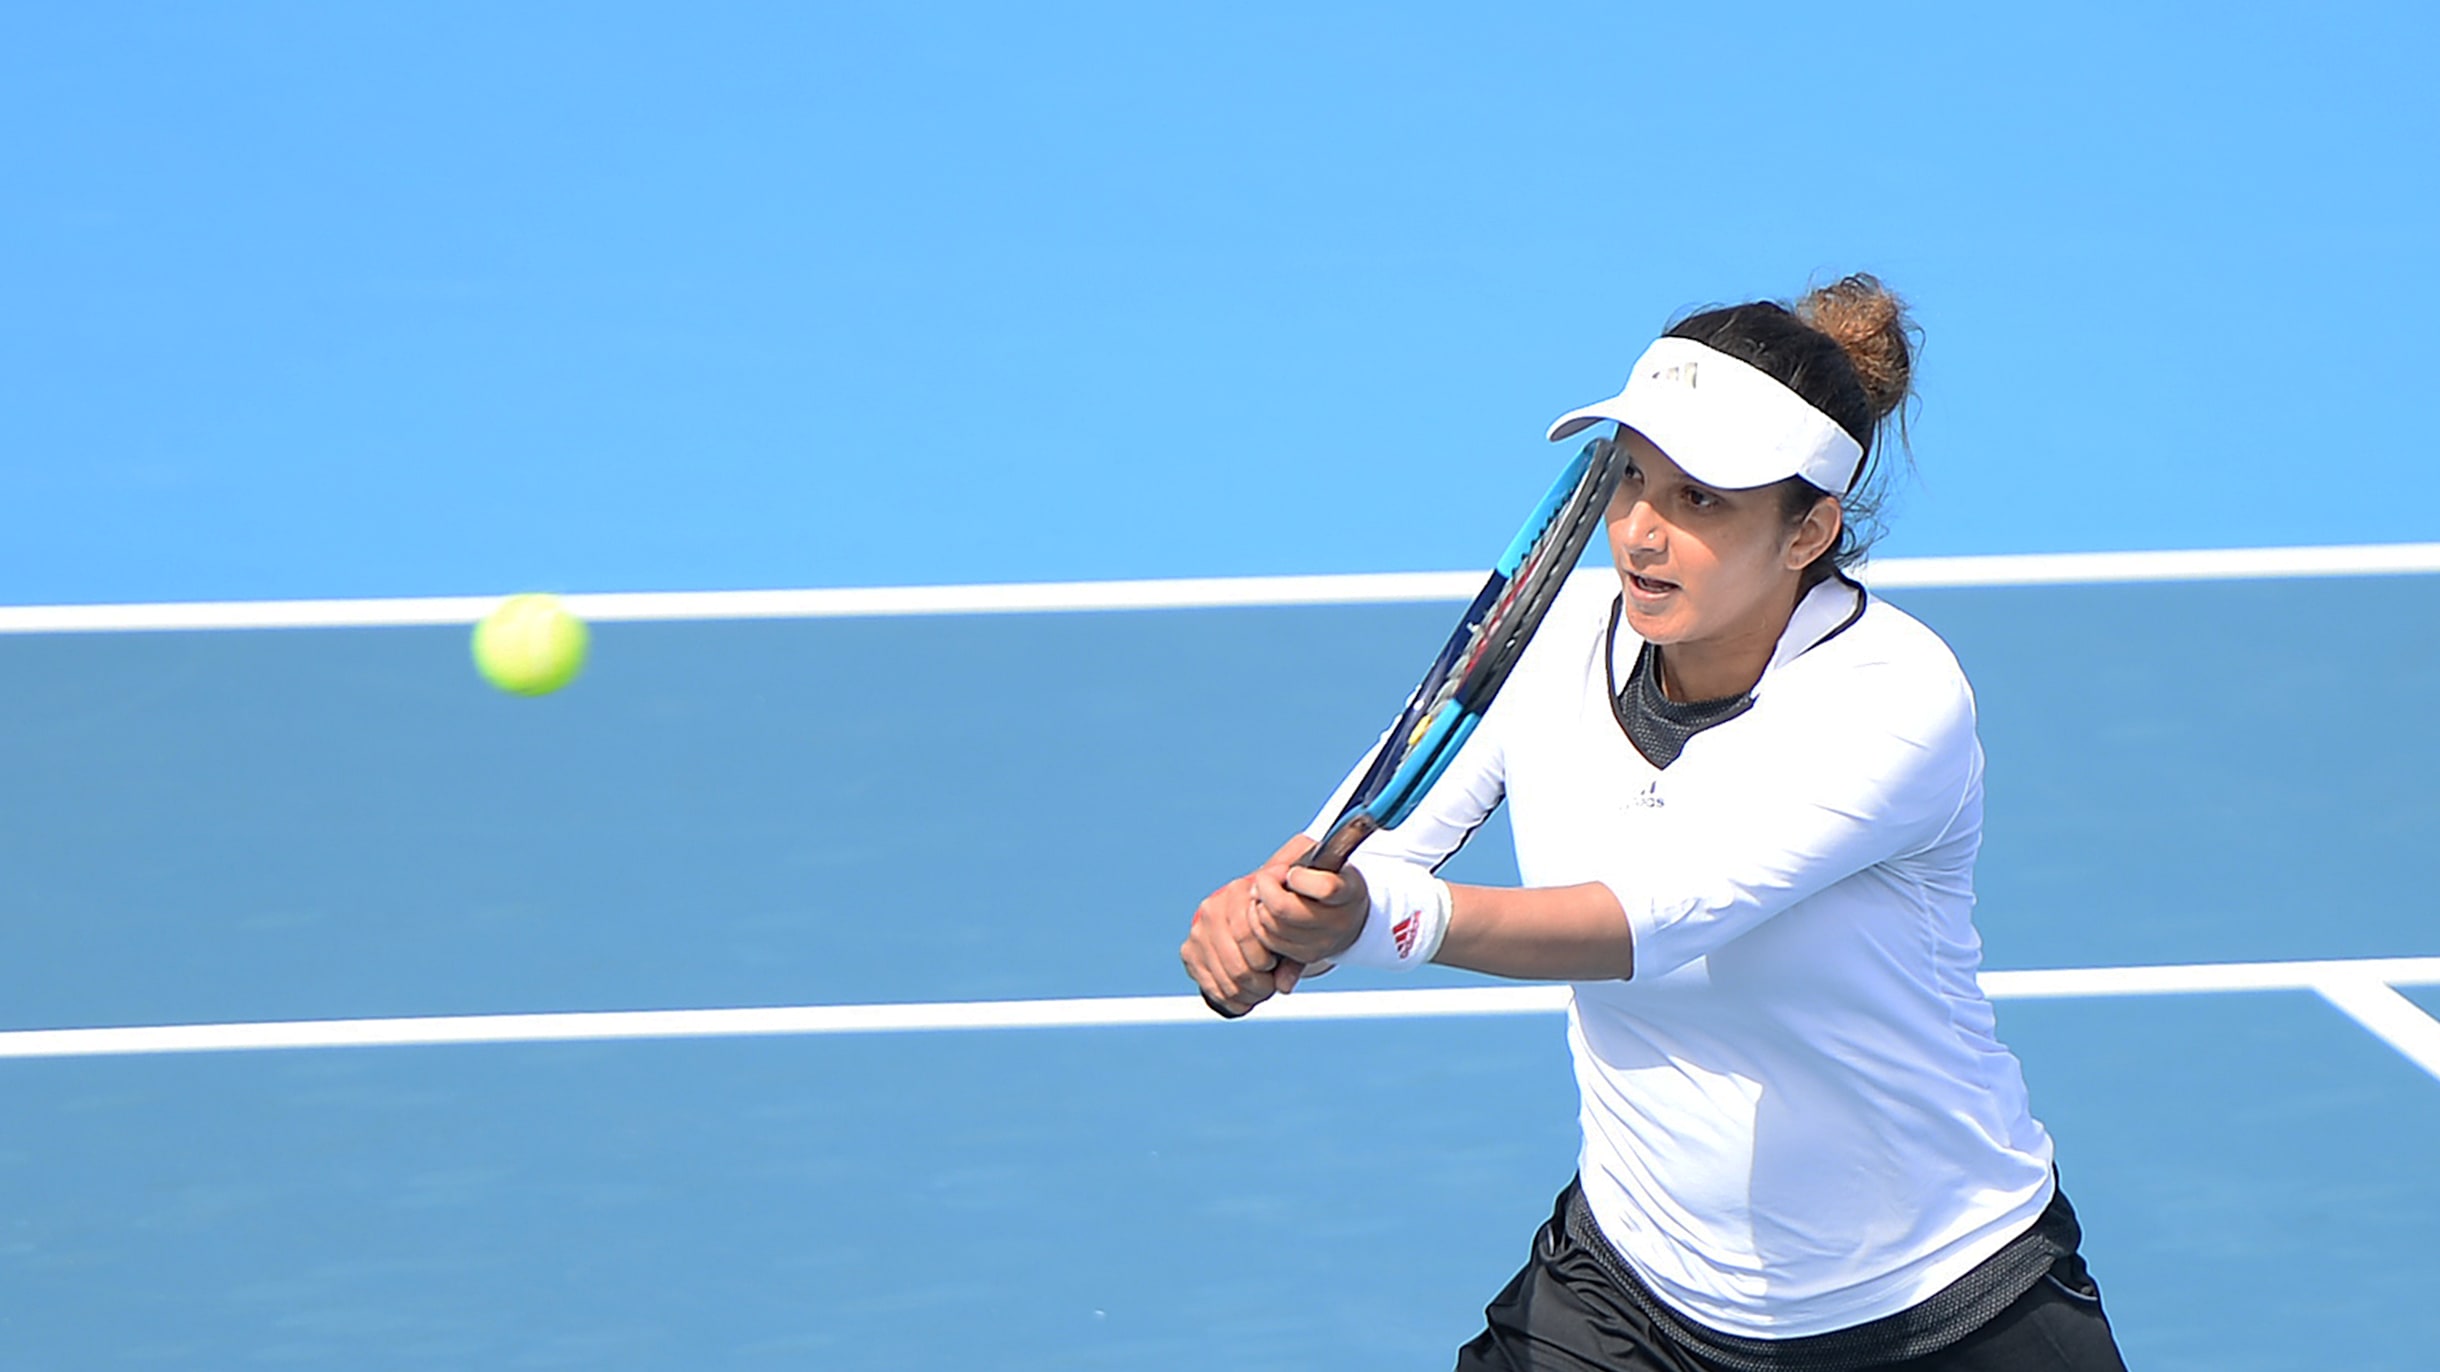 Dubai Tennis Championships 2023: Women's draw, schedule, players